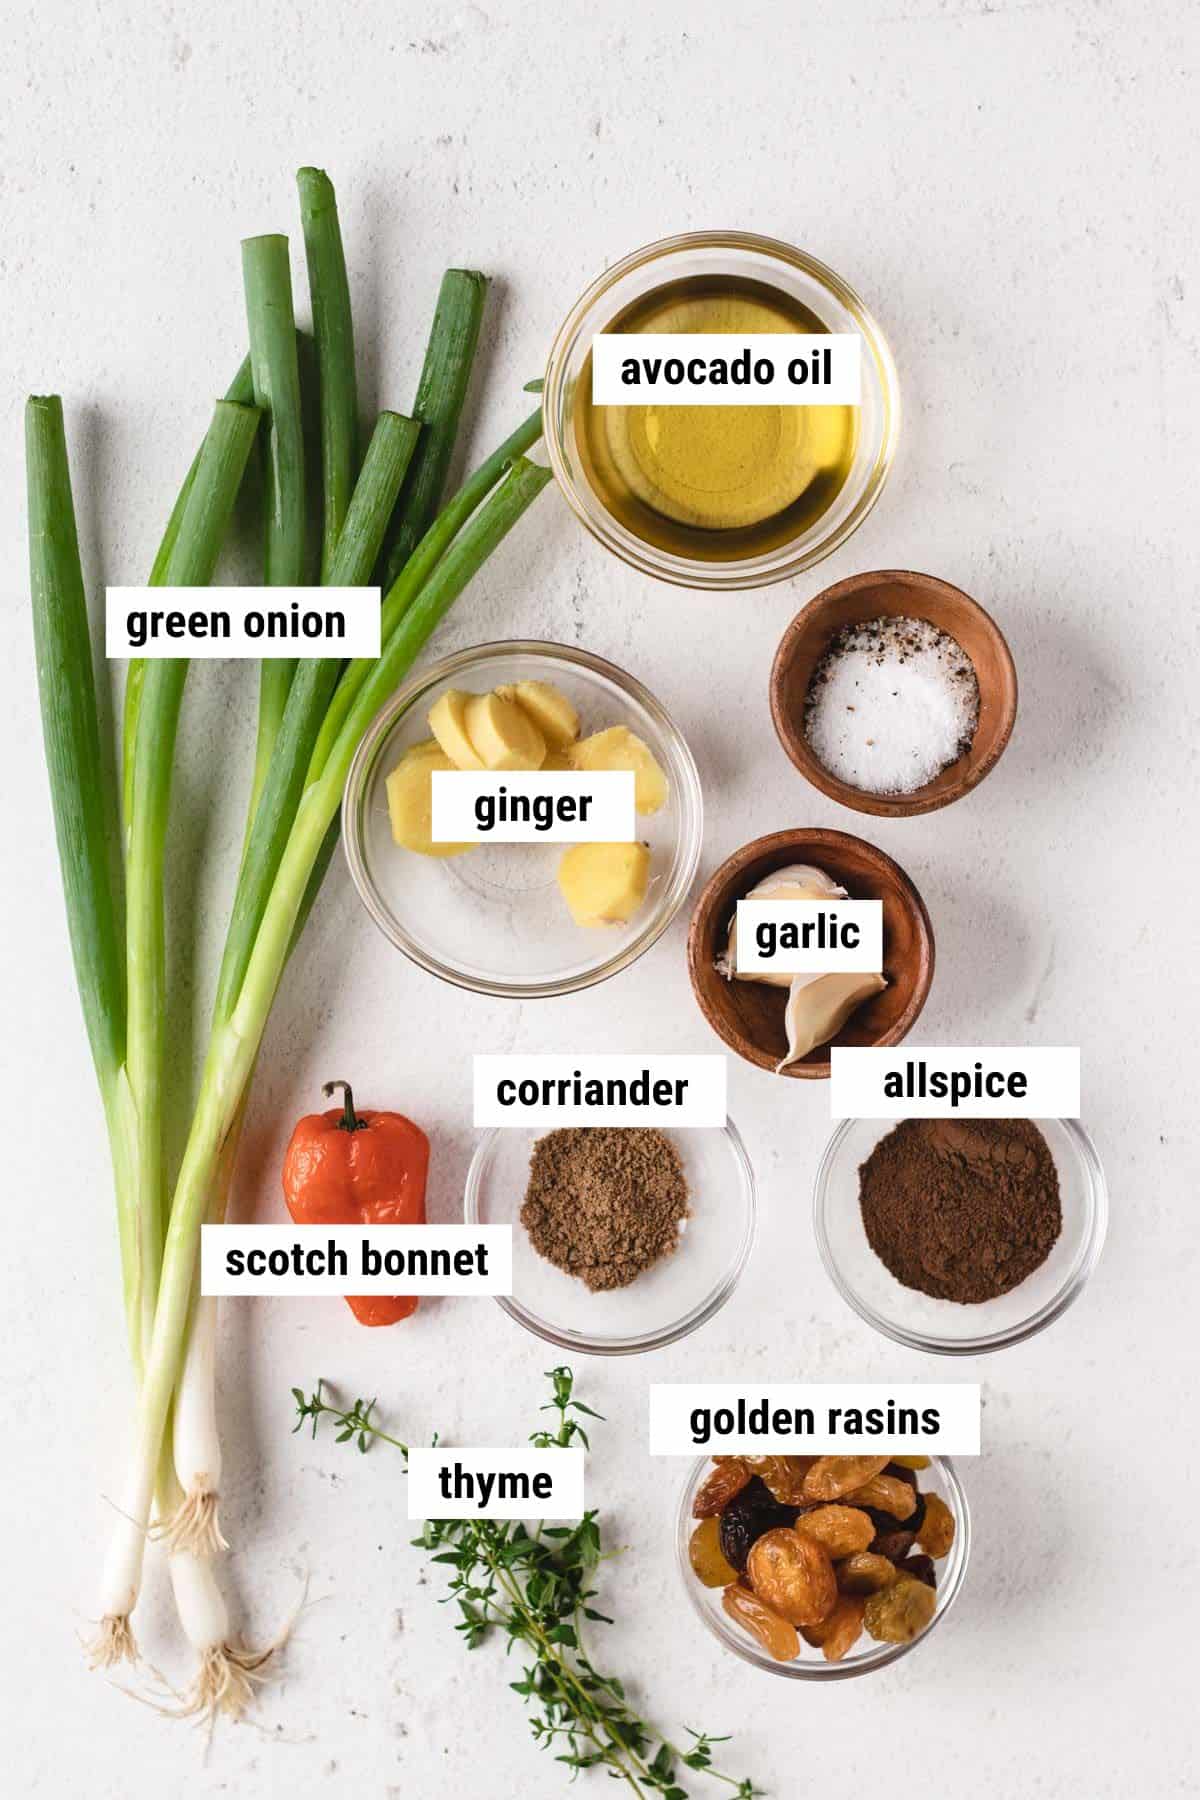 Picture of green onions, avocado oil, ginger, garlic, chili, corriander, allspice, thyme, and golden raisins.